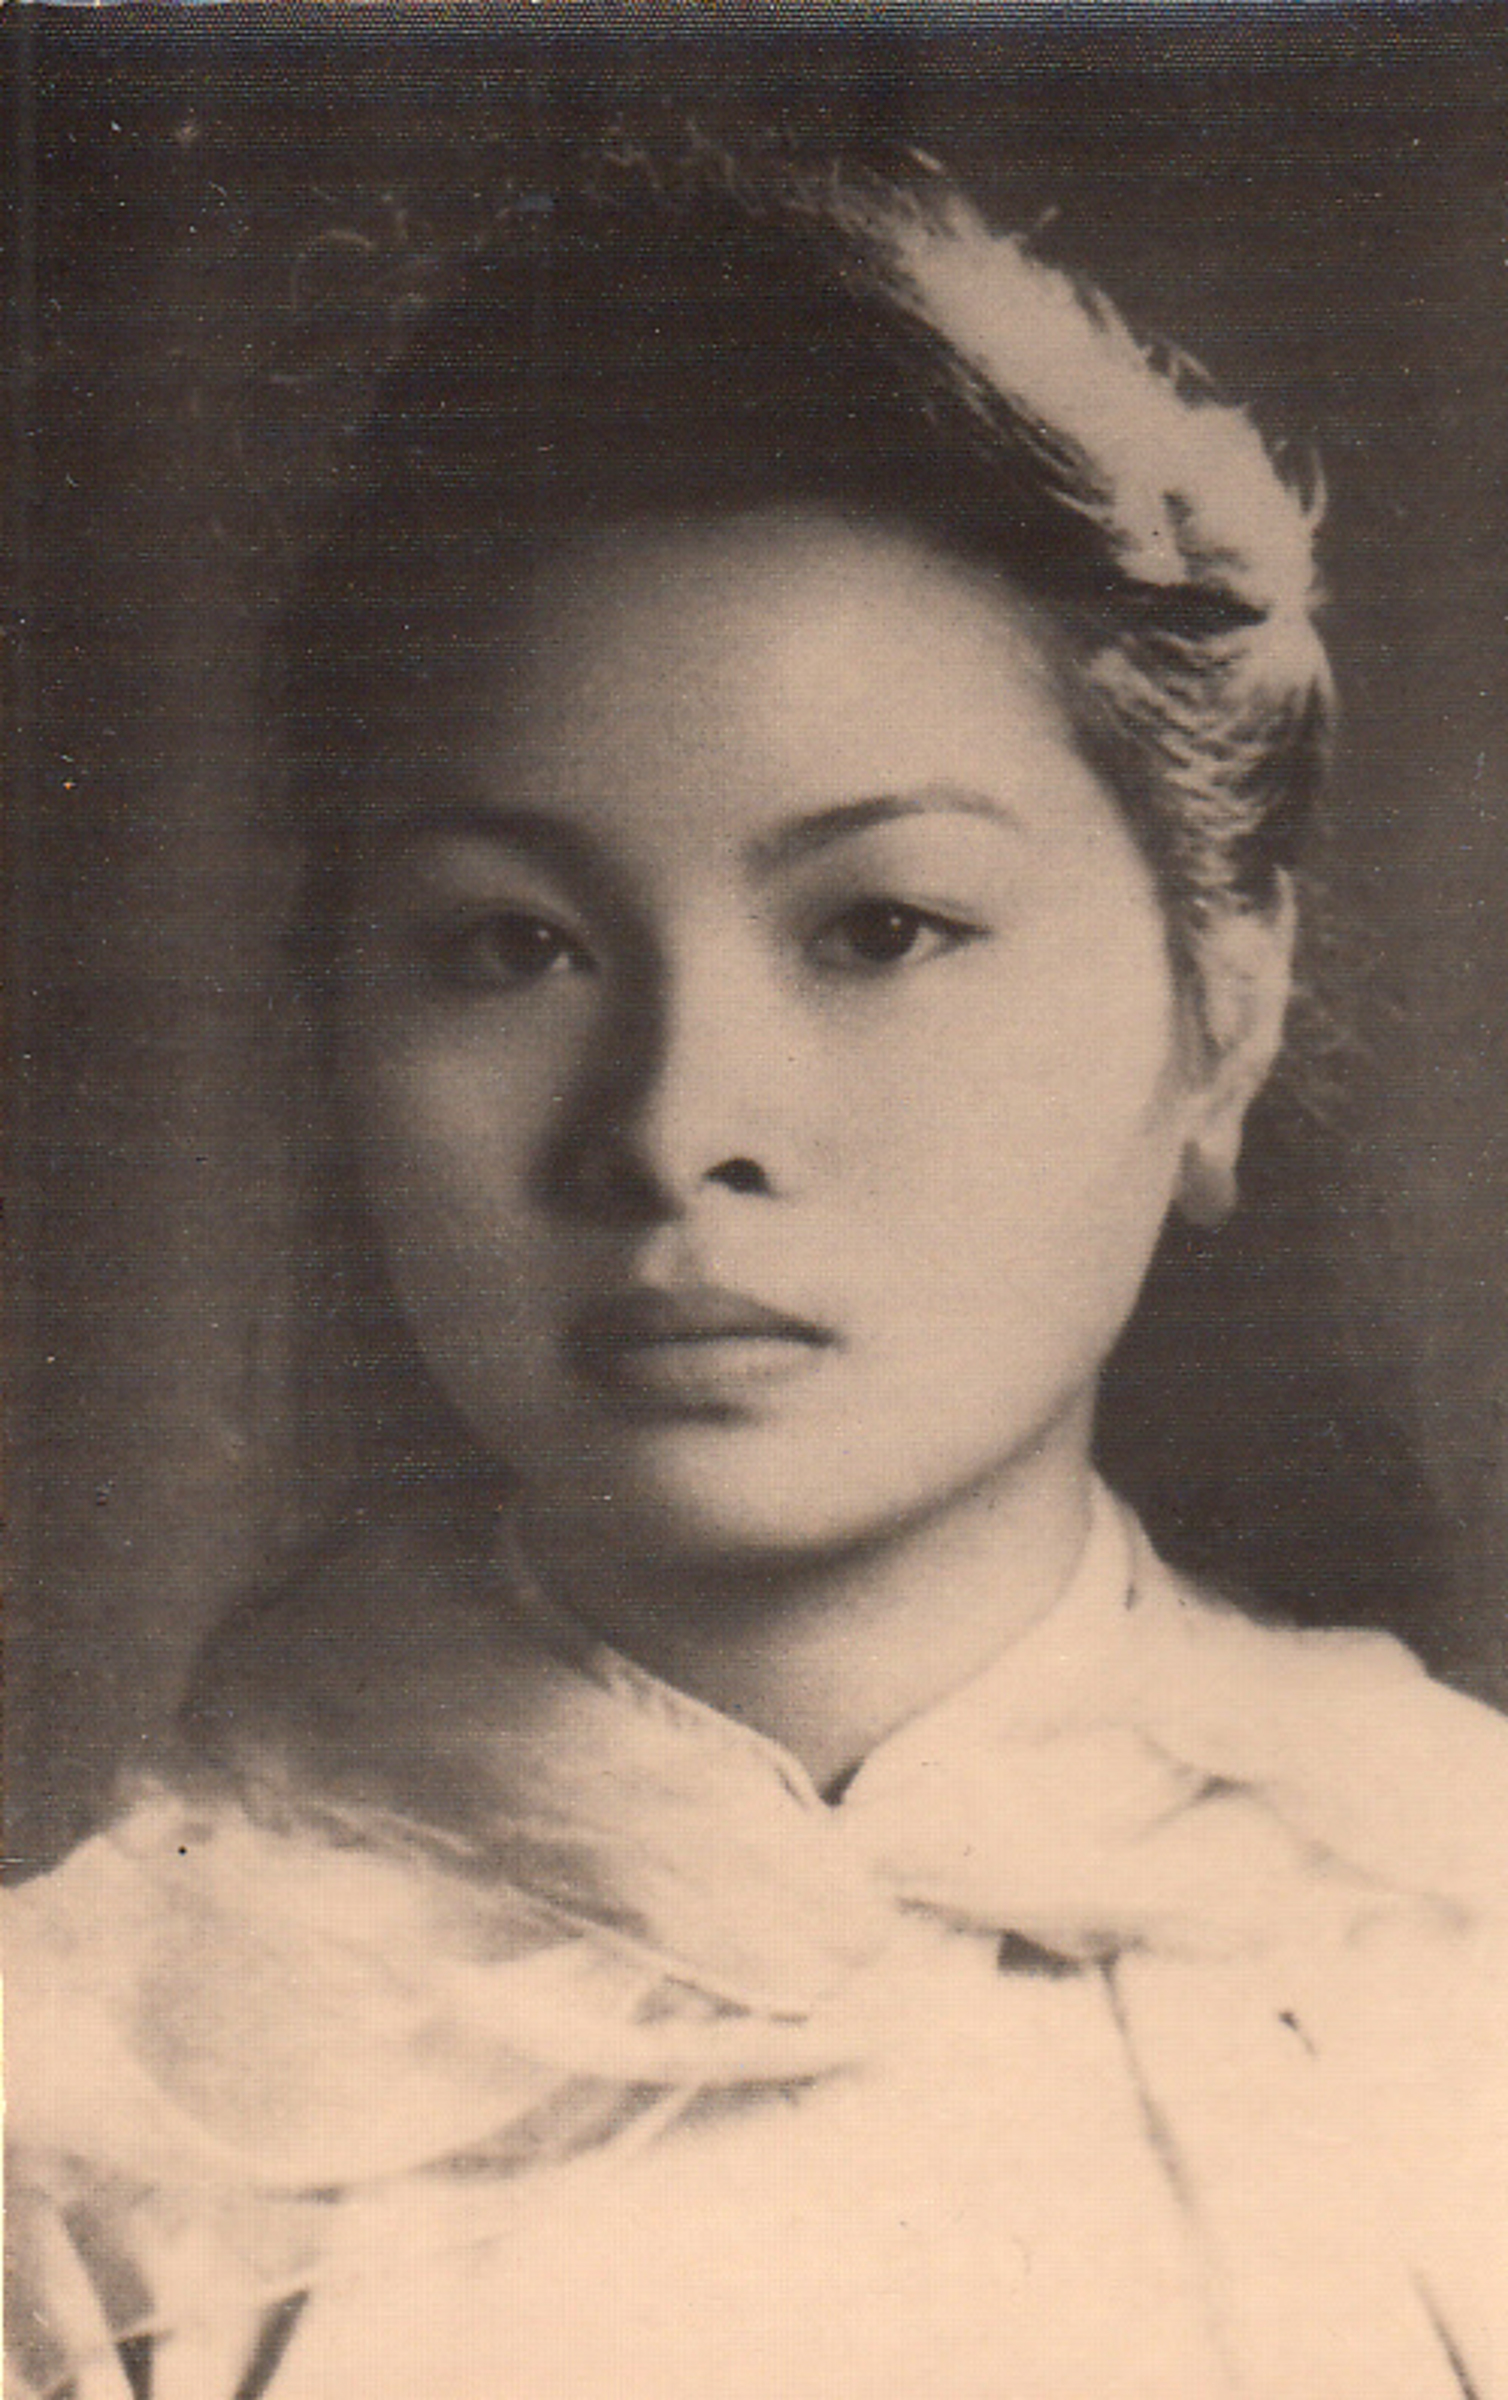 Nhung at the age of 17